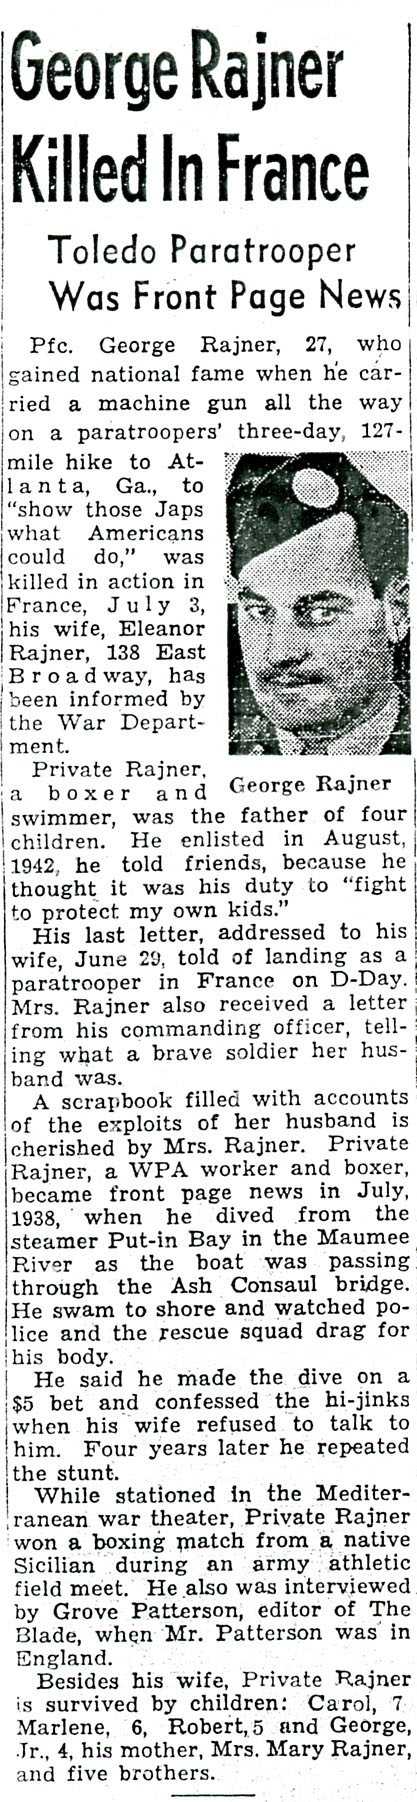 Pfc. George Rajner killed in France.